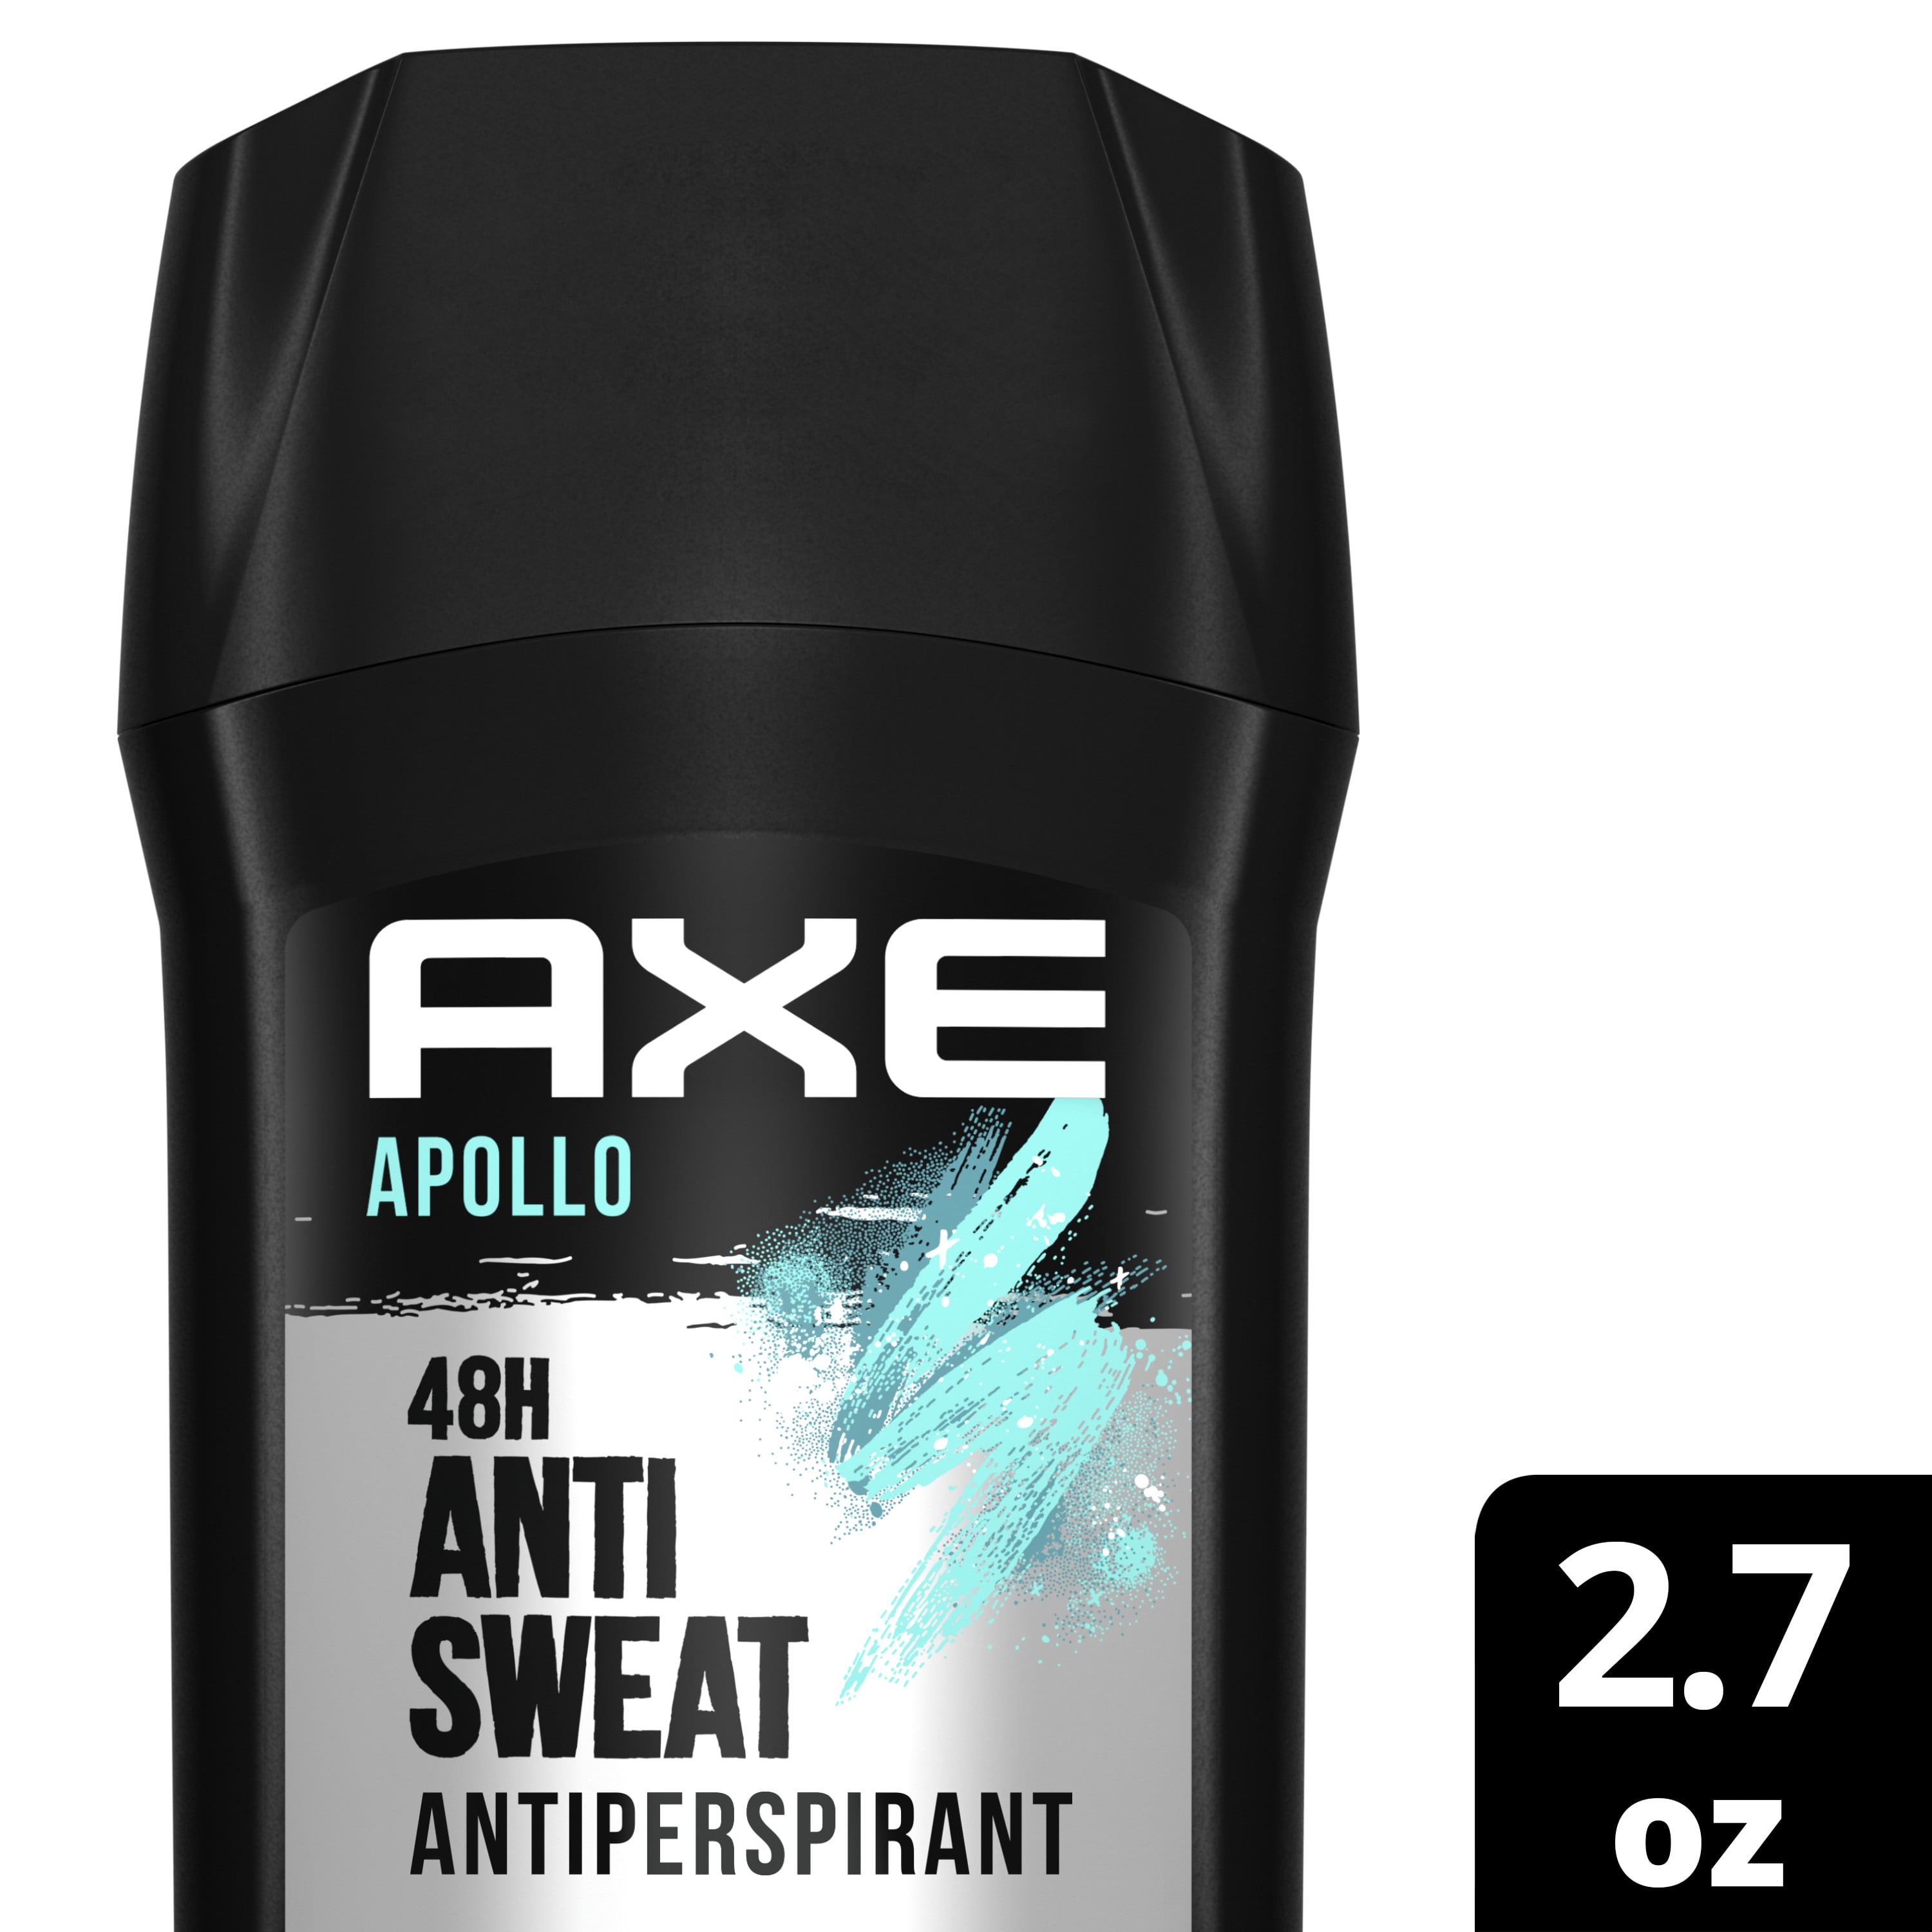 Axe Apollo 48H Anti Sweat High Definition Scent Antiperspirant, 2.7 ...